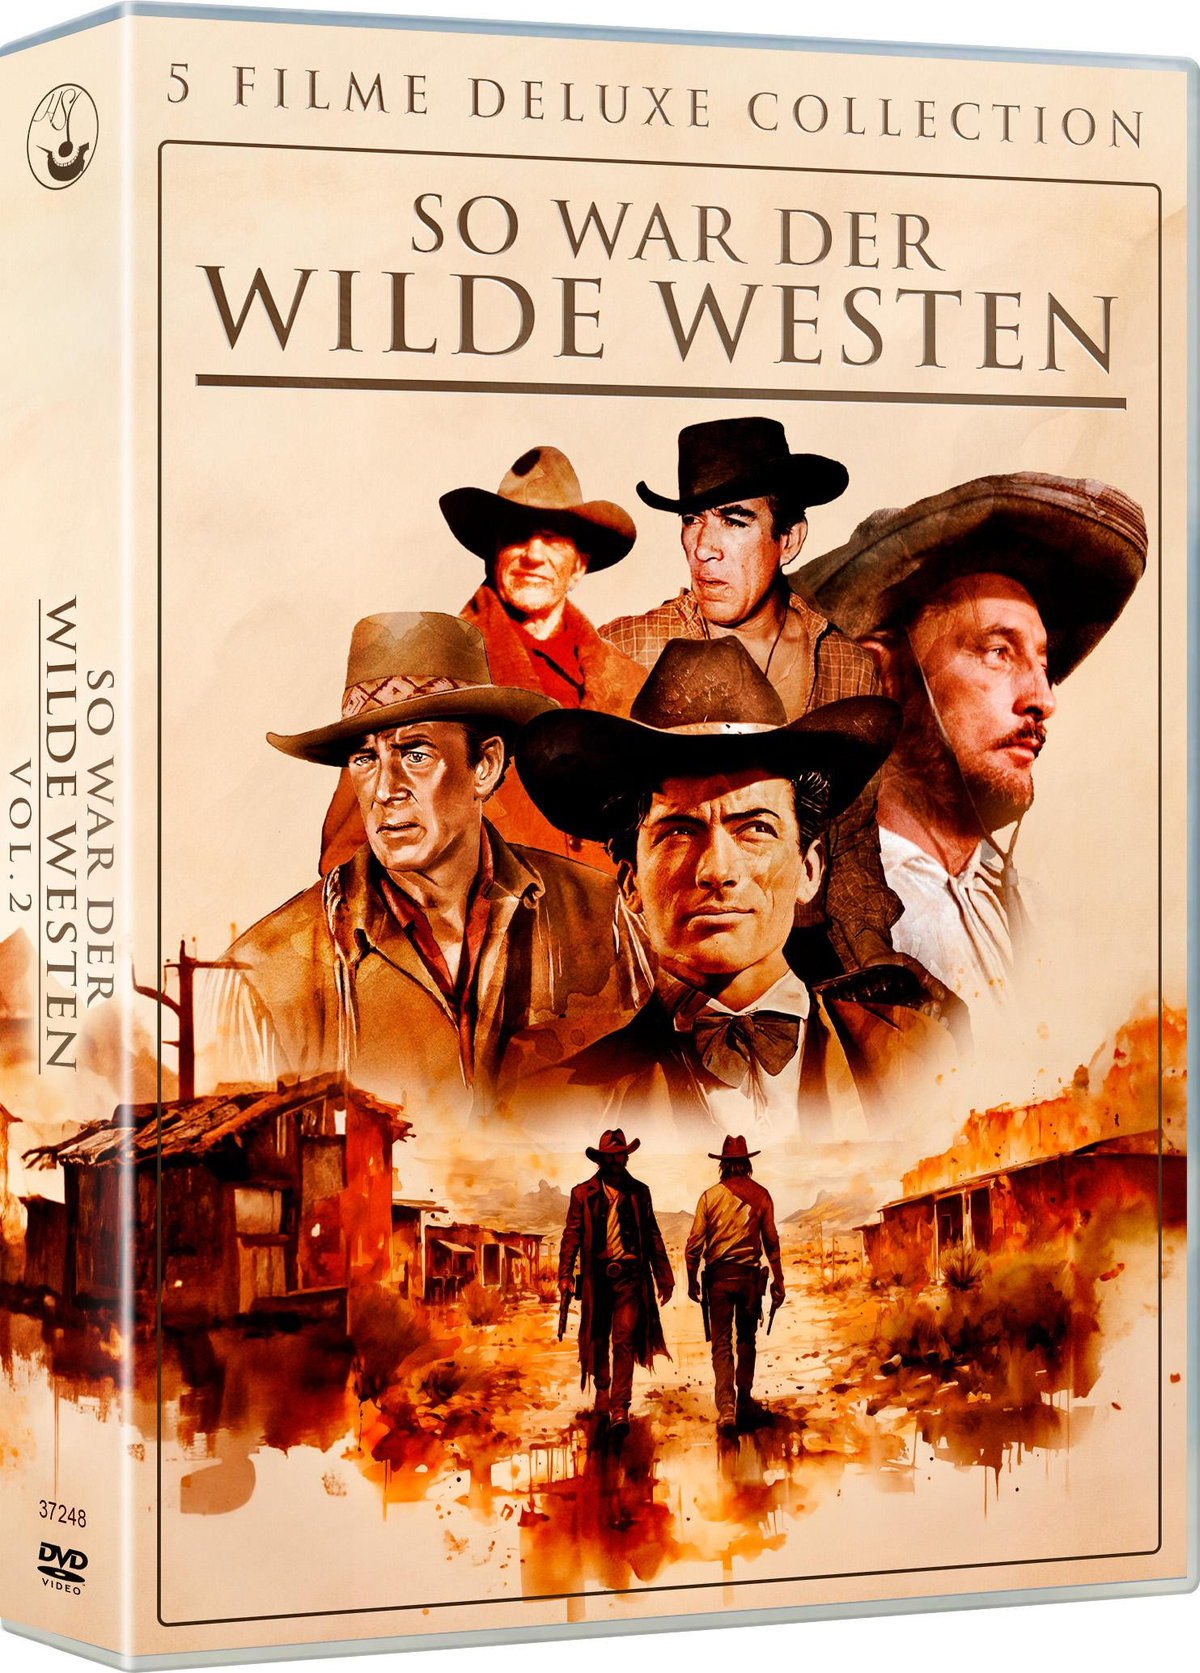 So war der wilde Westen - Deluxe Collection 2